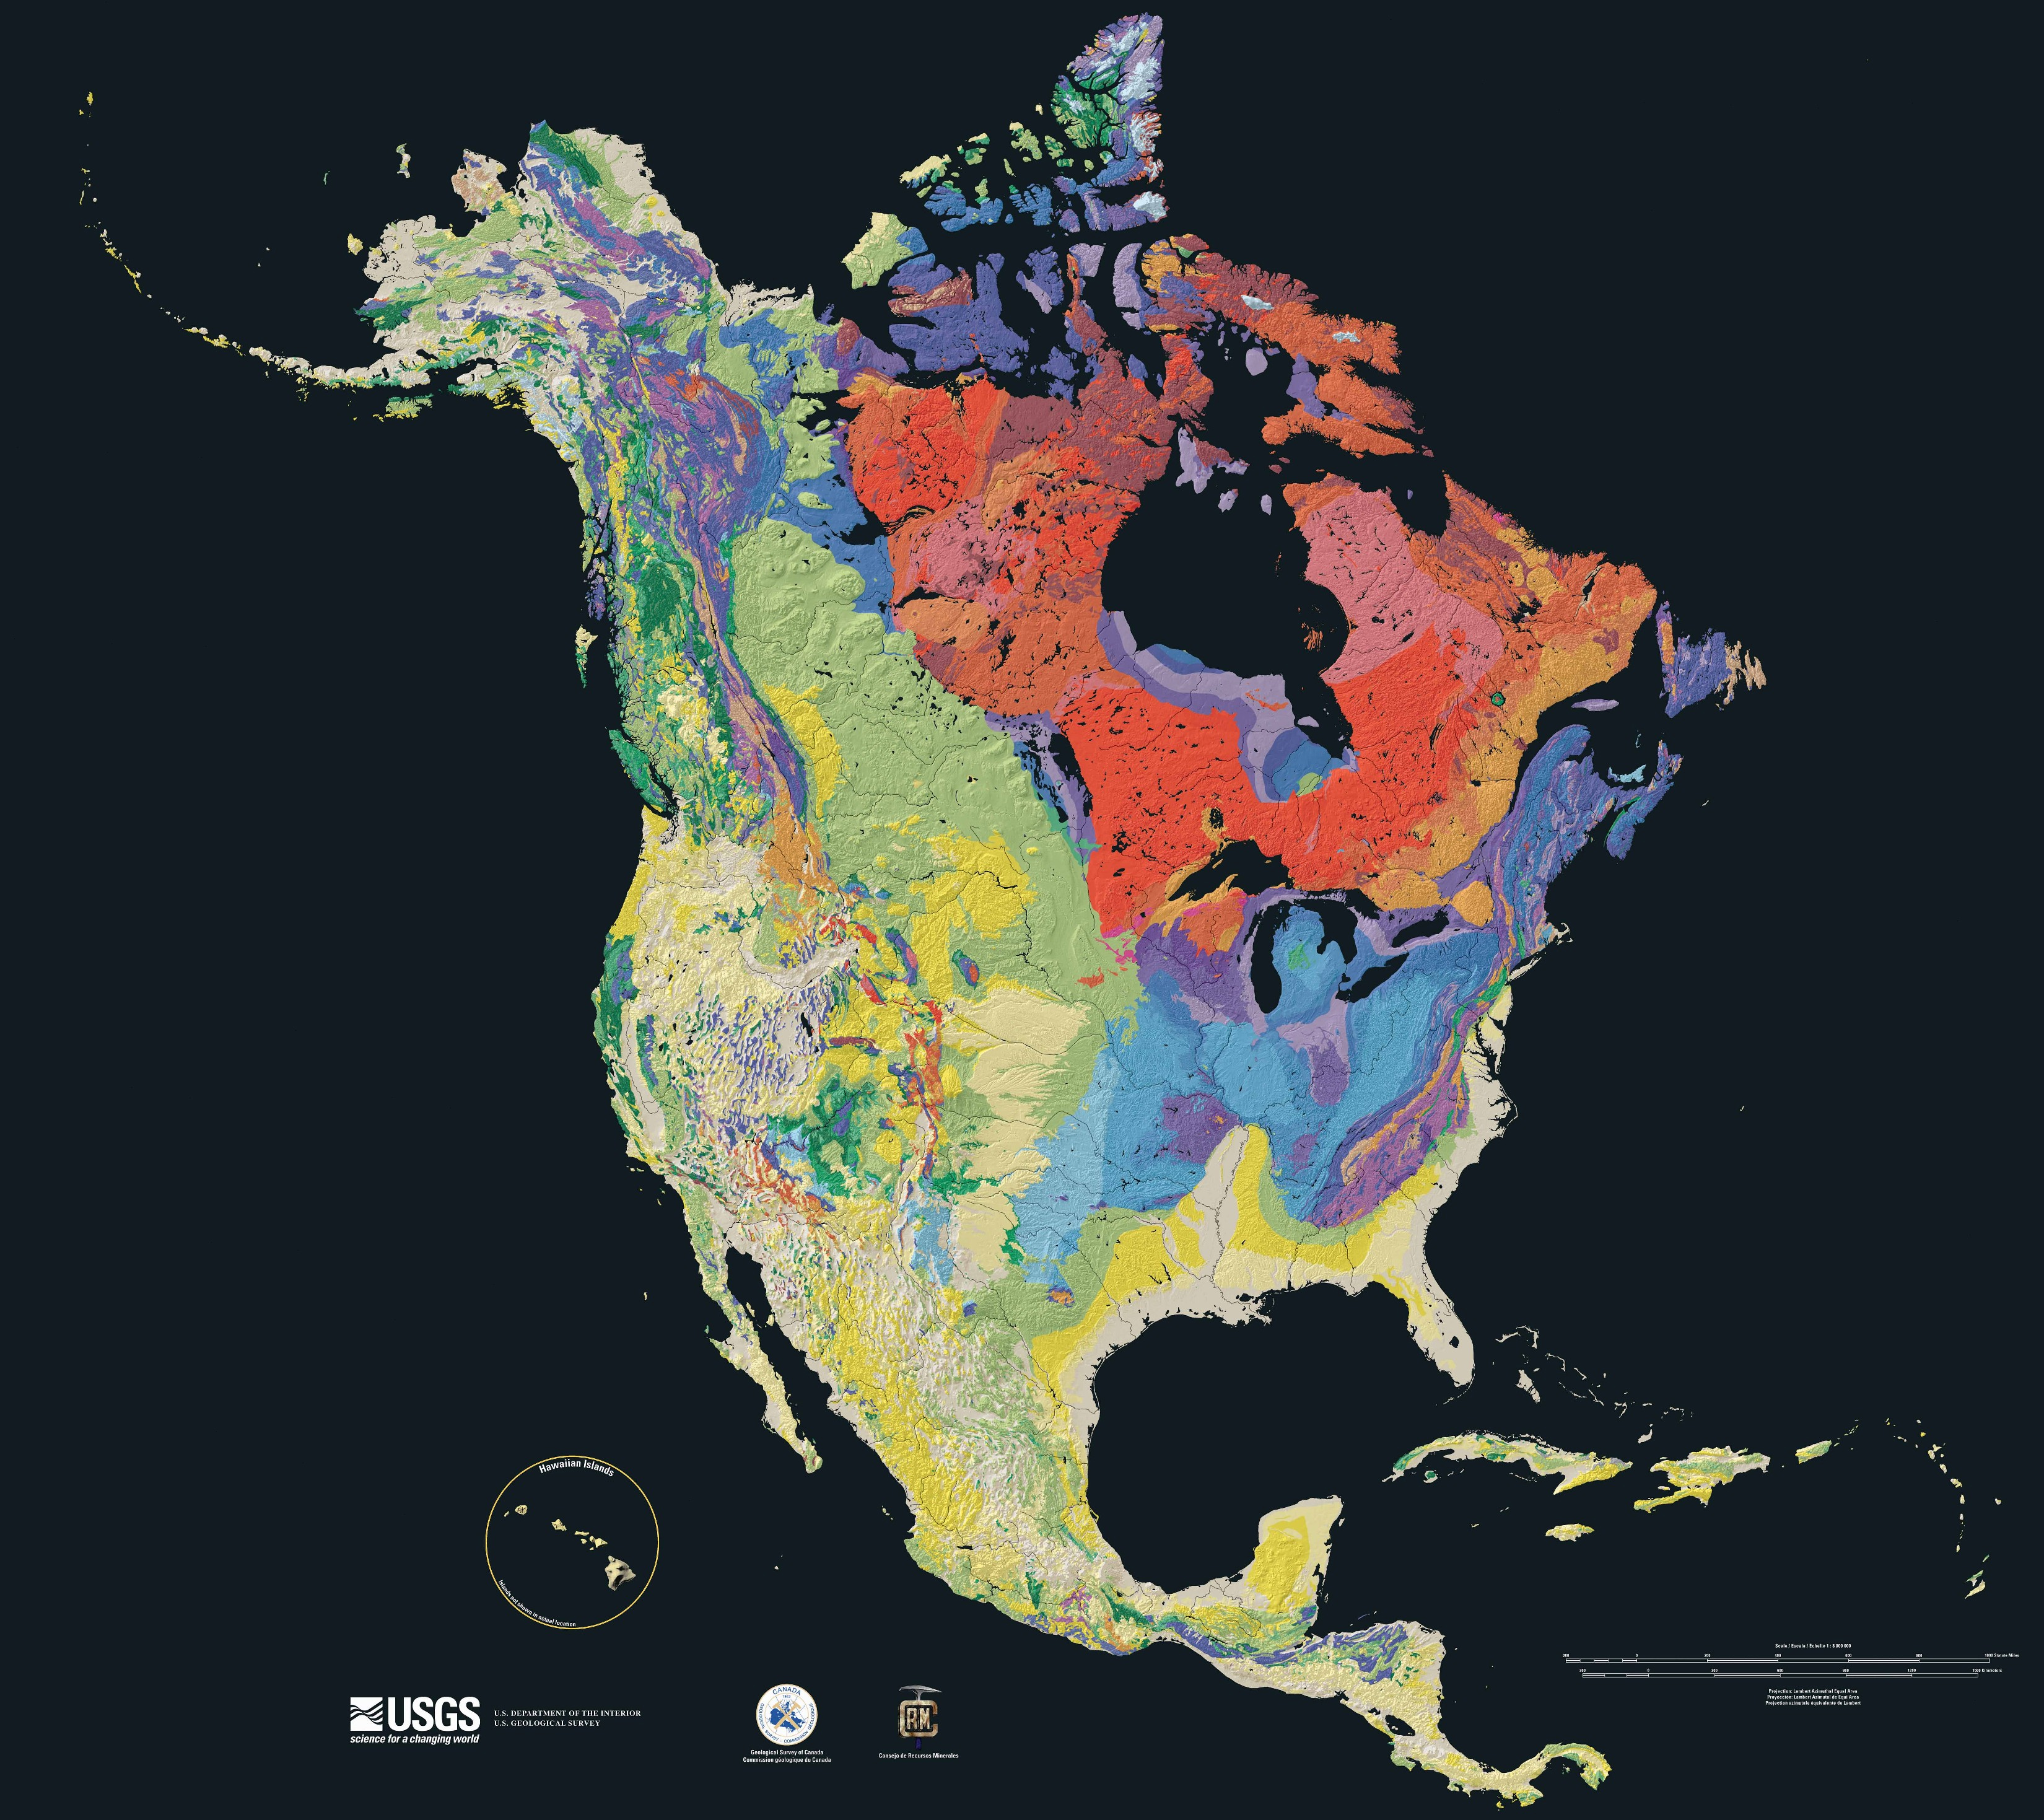 USGS geologic map of North America